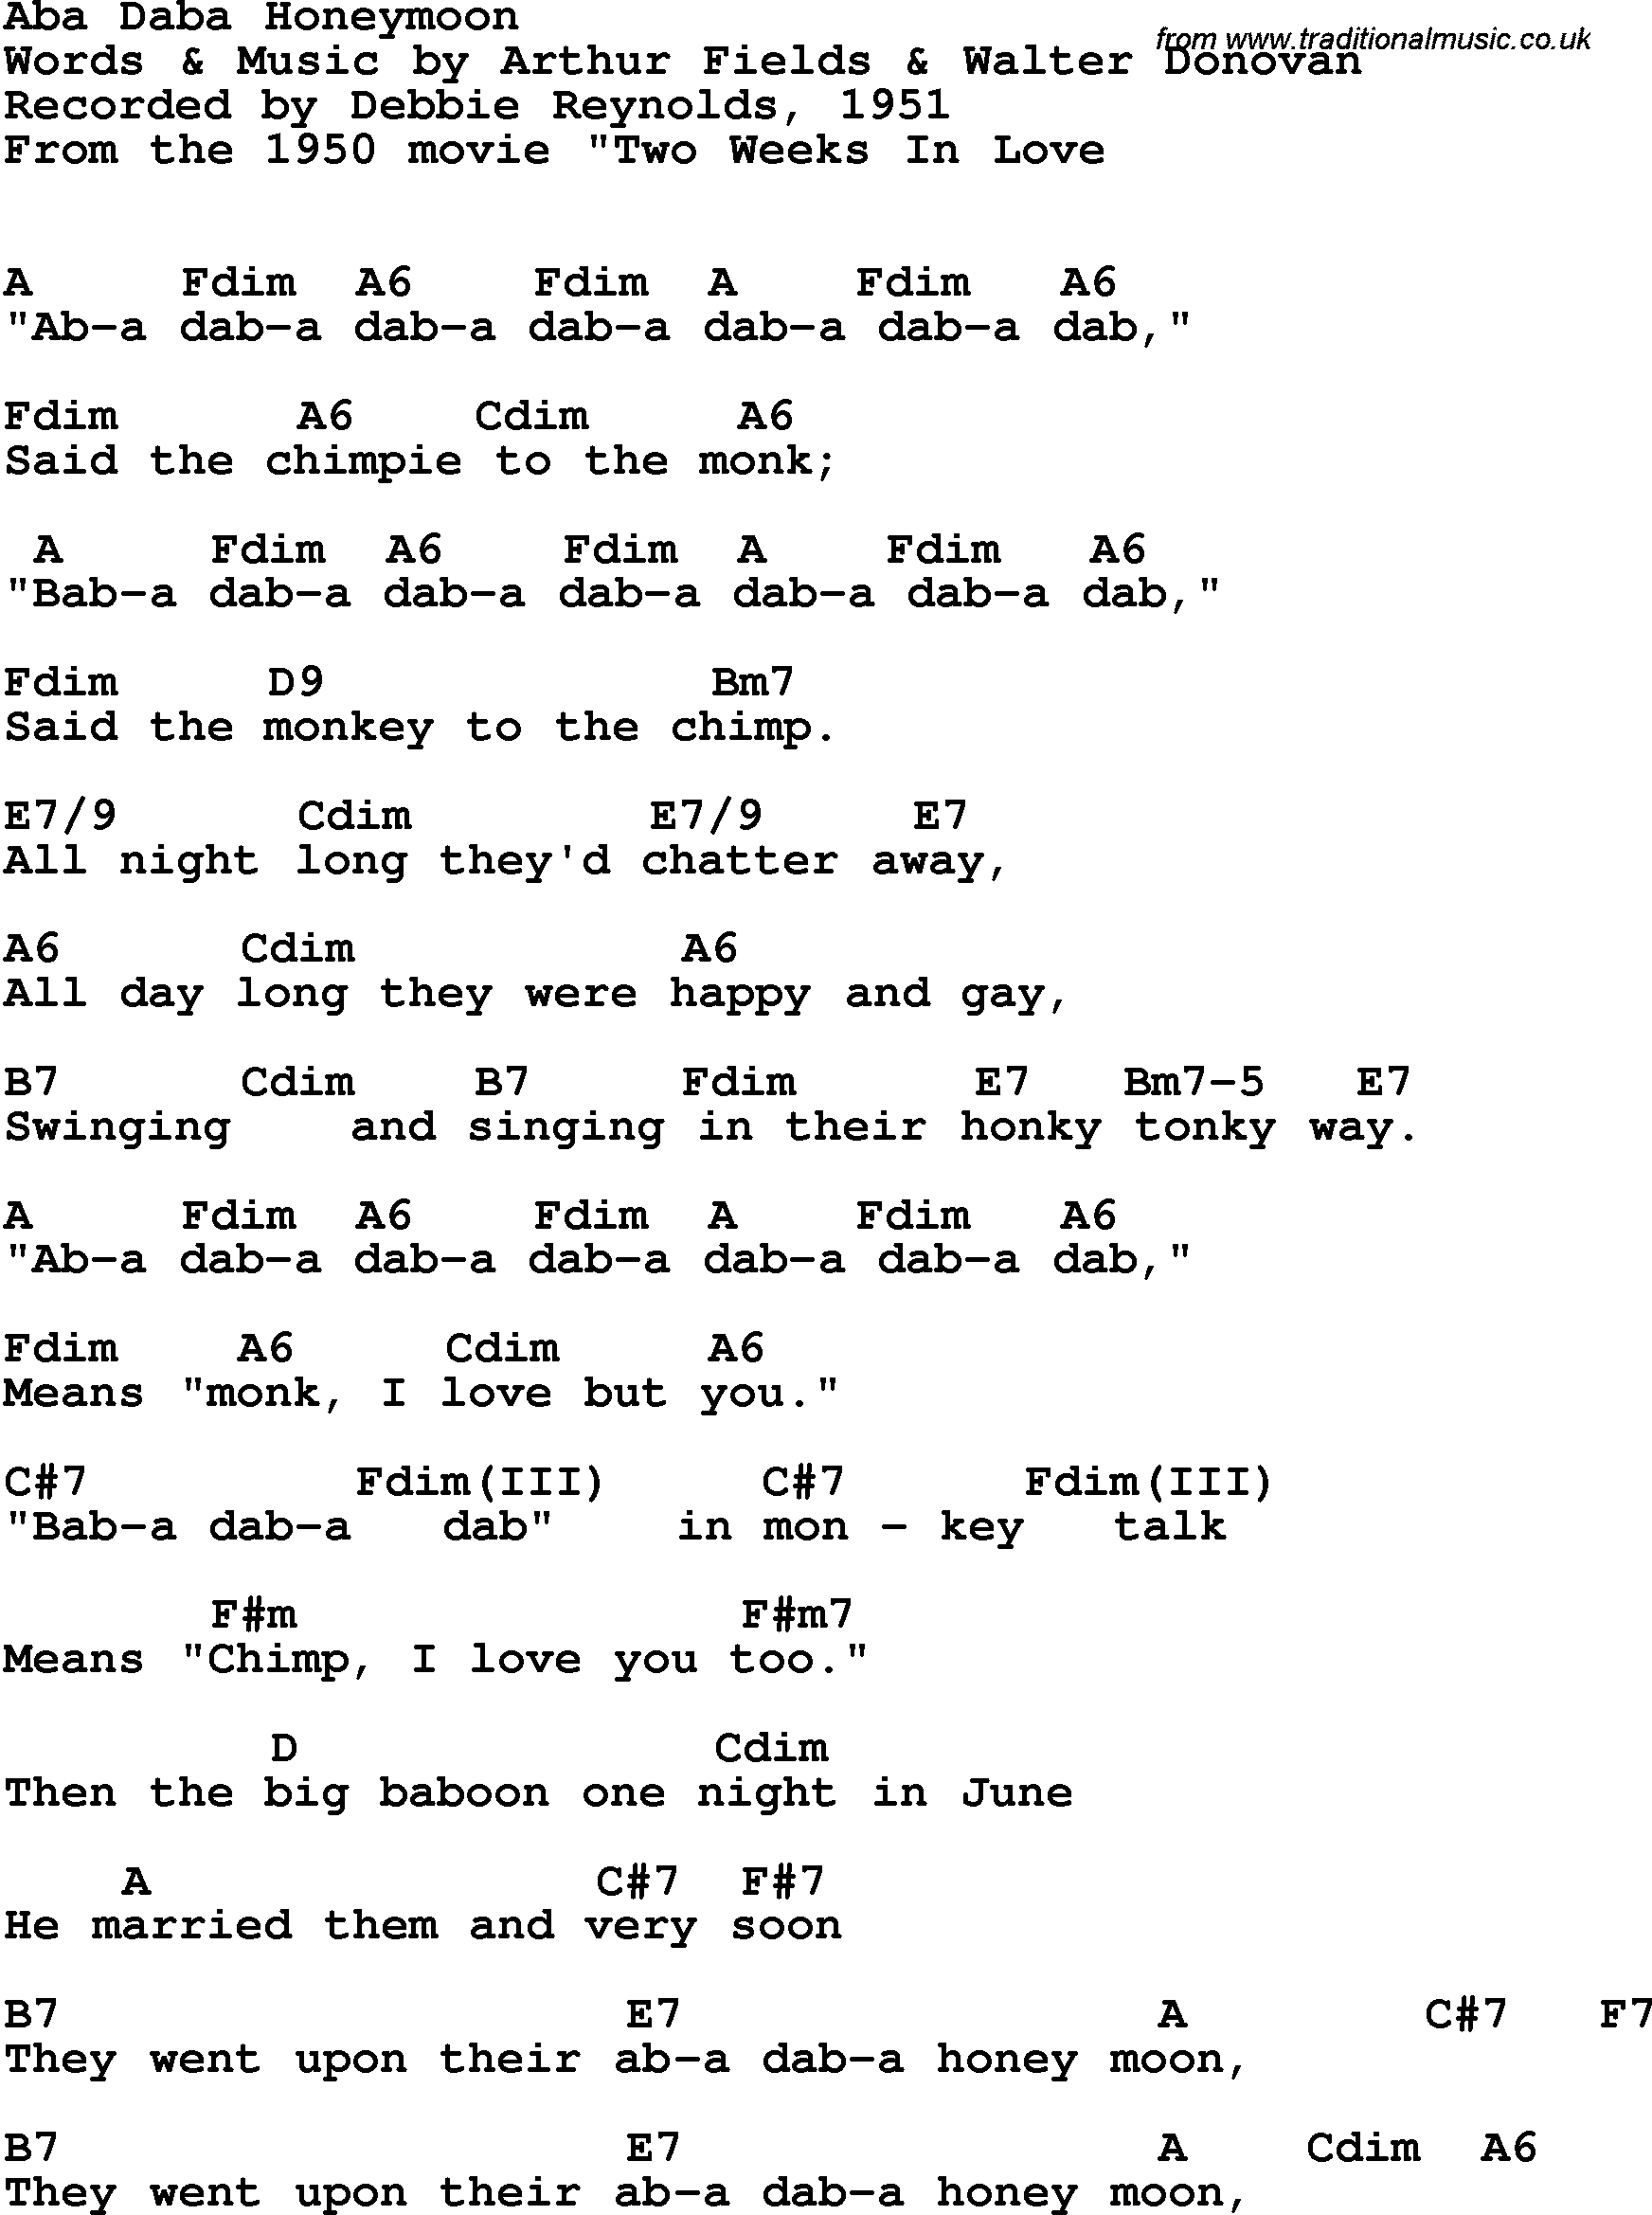 Song Lyrics with guitar chords for Aba Daba Honeymoon - Debbie Reynolds, 1951